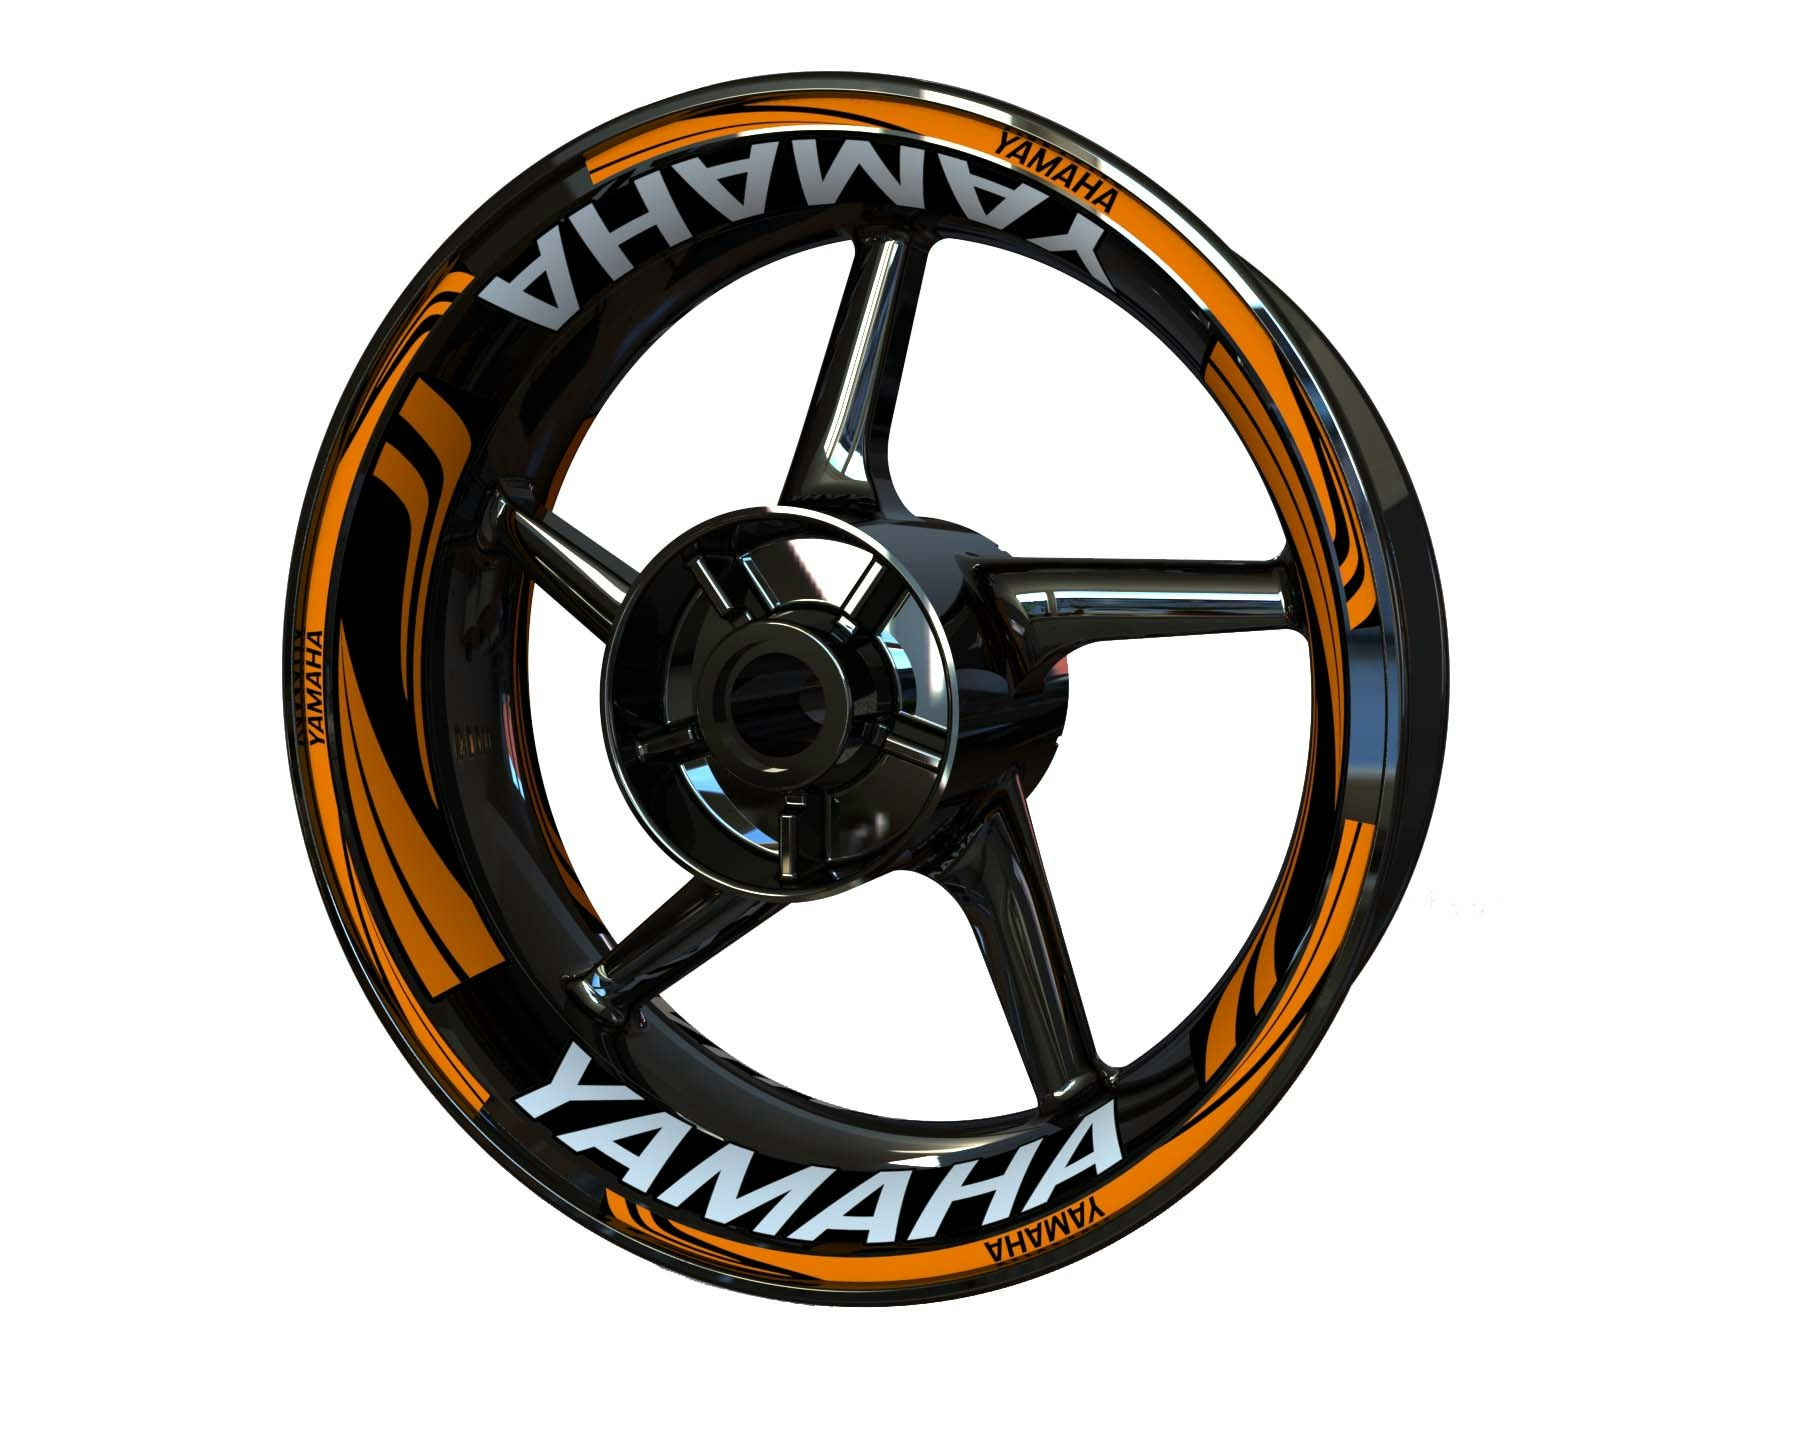 Yamaha Velgstickers - Plus Design